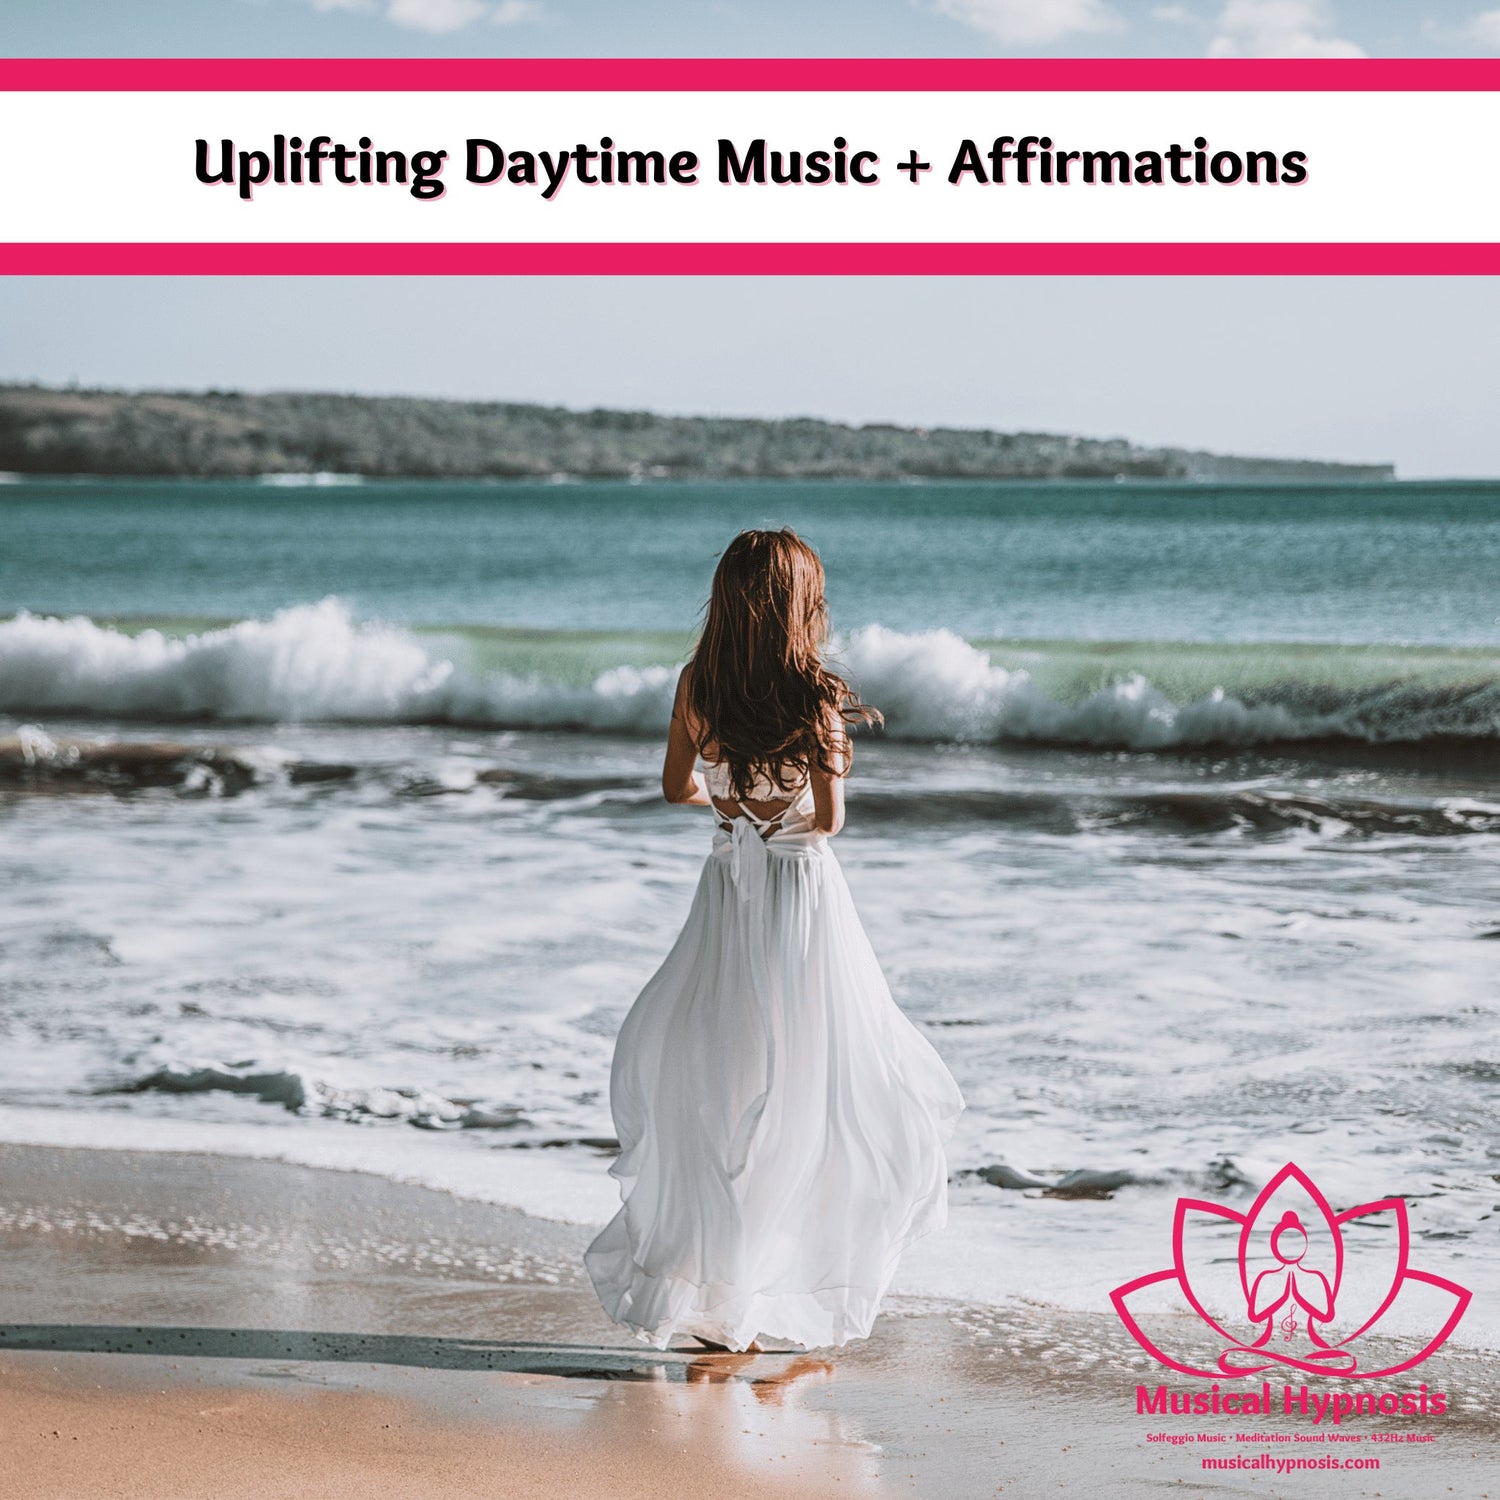 Uplifting Daytime Music + Affirmations